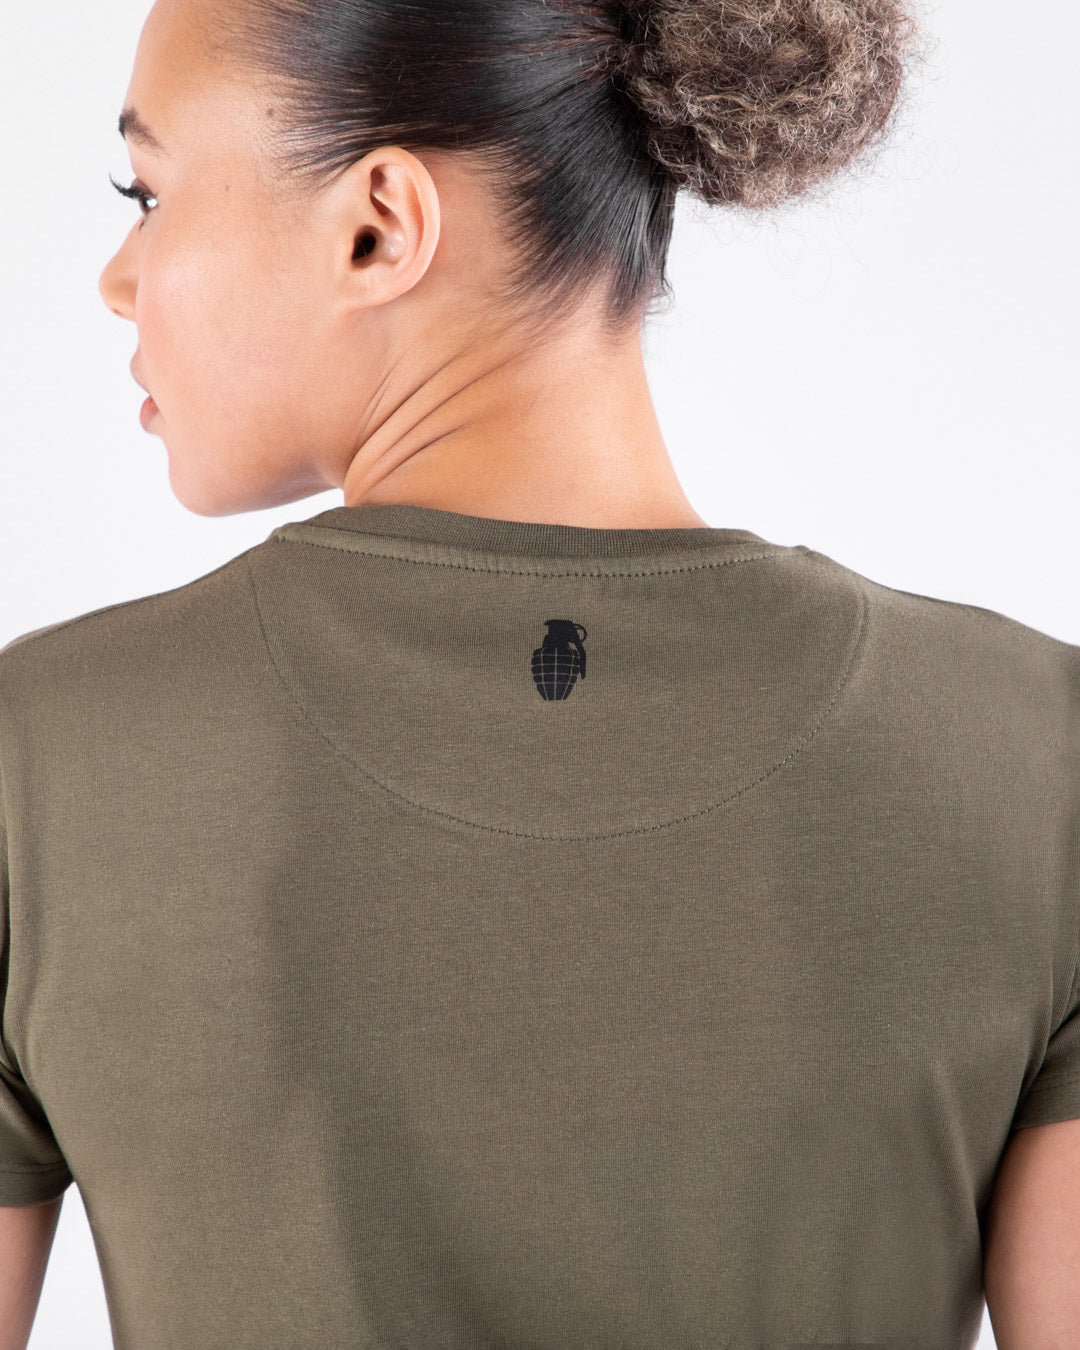 Grenade Womens Core T Shirt Army Green Rear Close Up